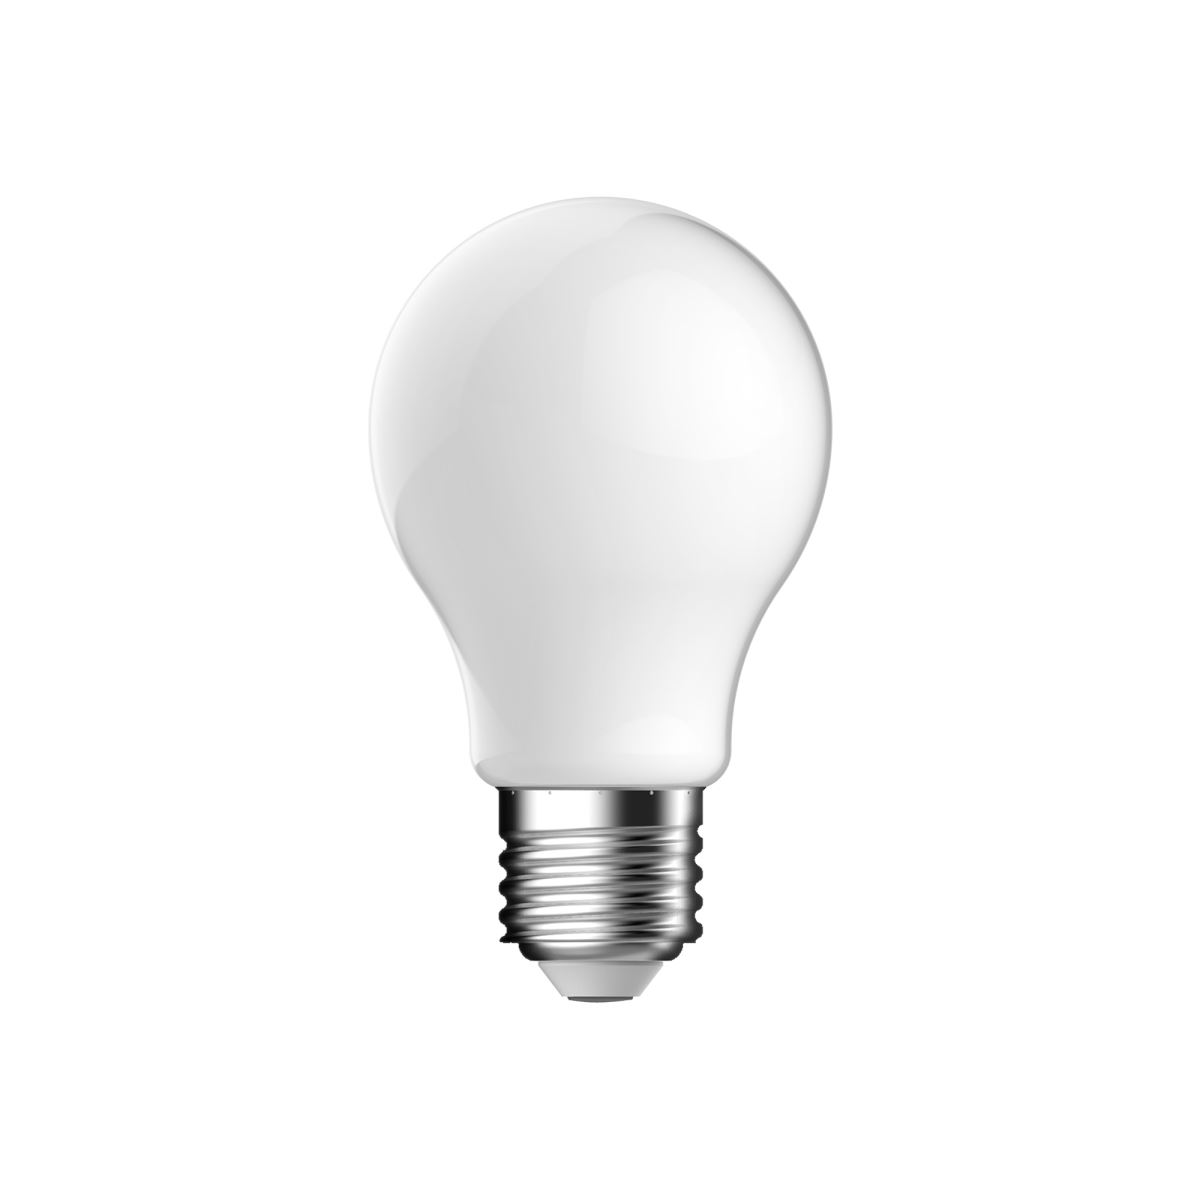 Nordlux Energetic LED Leuchtmittel E27 A60 weiß 1521lm 2700K 11W 80Ra 360° dimmbar 6x6x10,4cm von Energetic